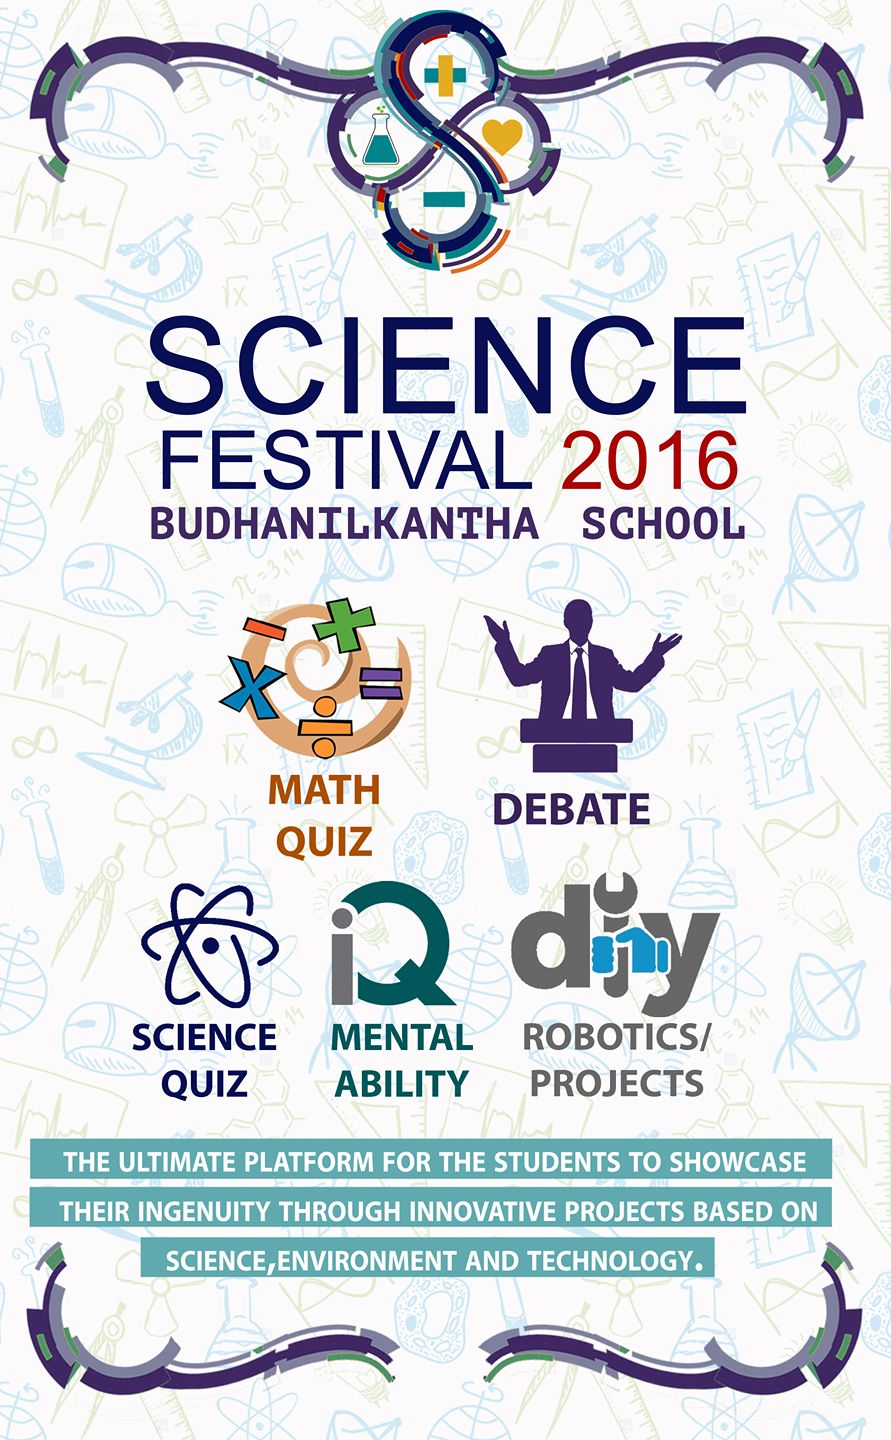 science-festival-2016-budhanilkantha-school